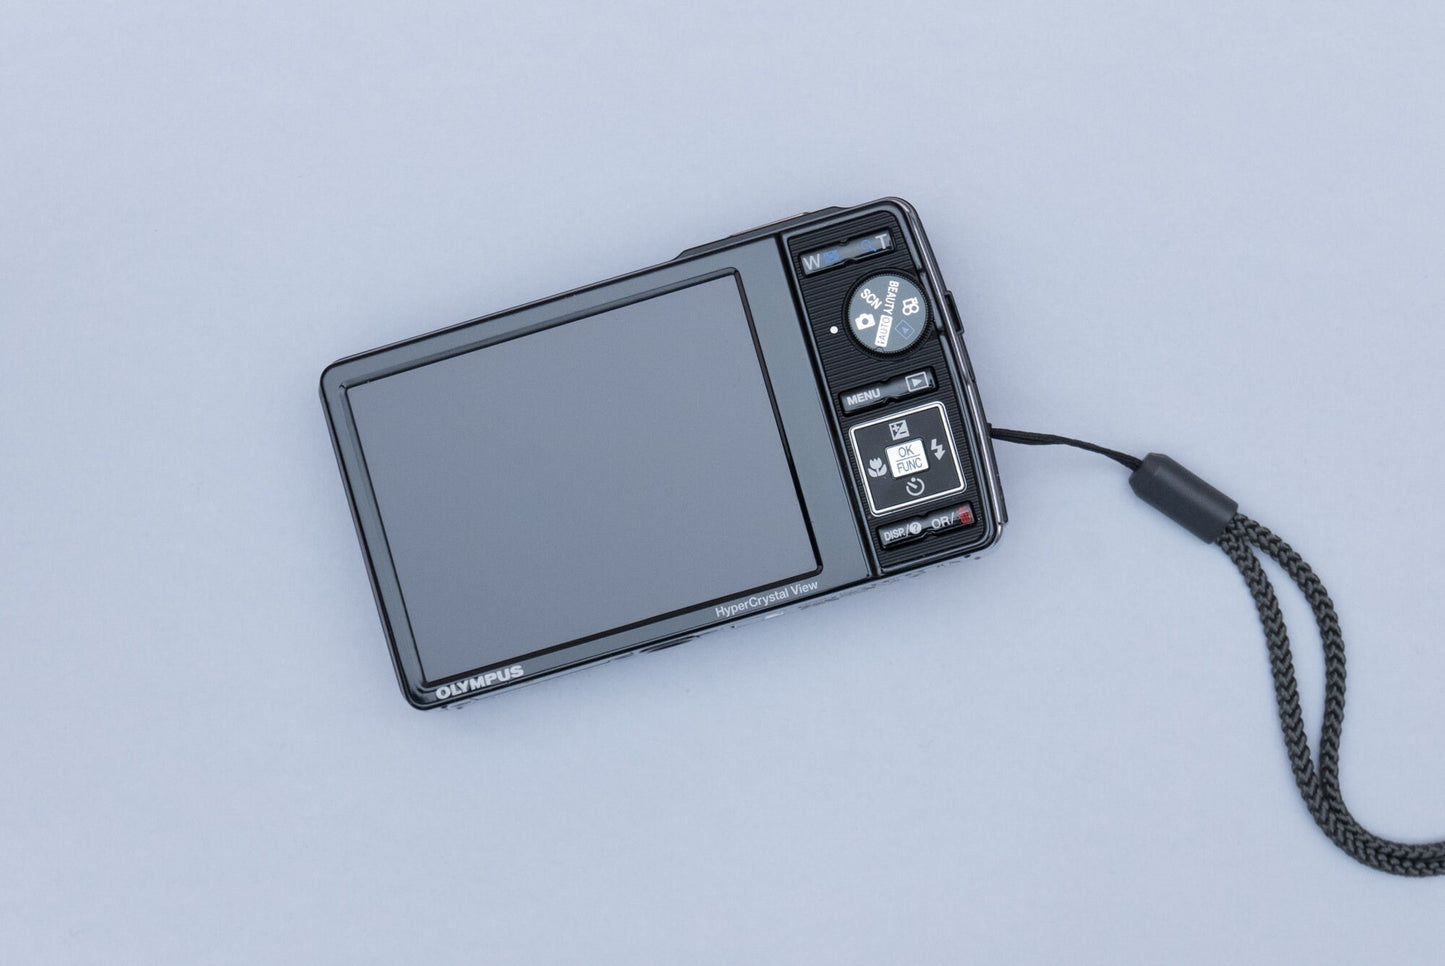 Olympus µ-7020 [mju] Compact Digital Camera